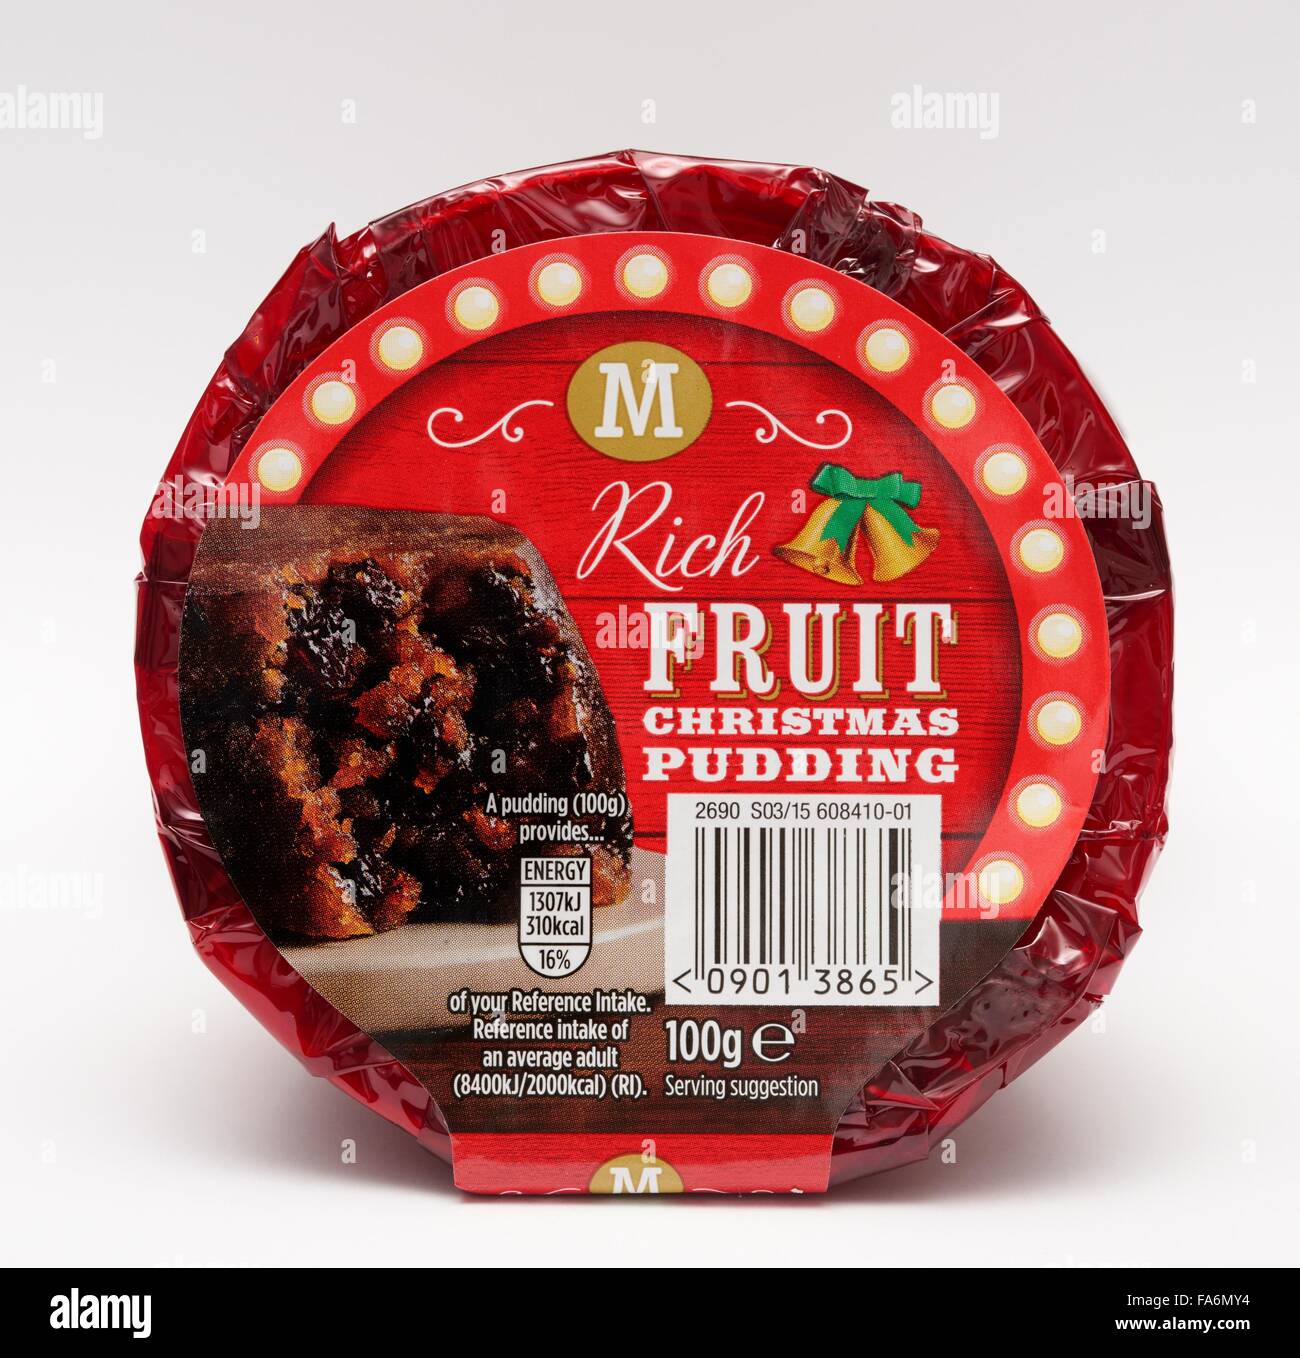 Morrisons rich fruit Christmas pudding Stock Photo